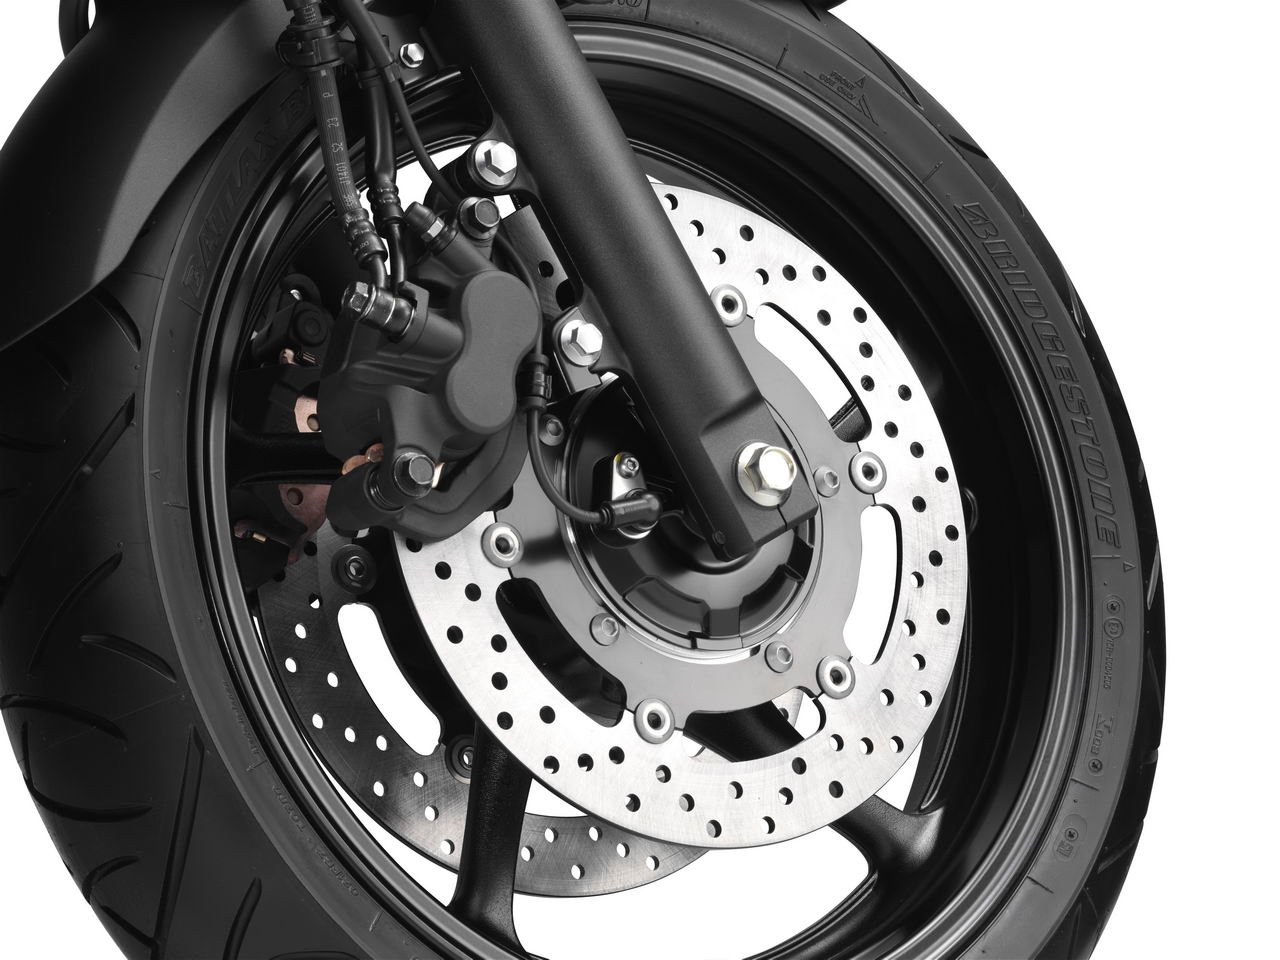 Listino Yamaha XJ6 ABS Naked Media - image 15449_yamaha-xj6abs on https://moto.motori.net